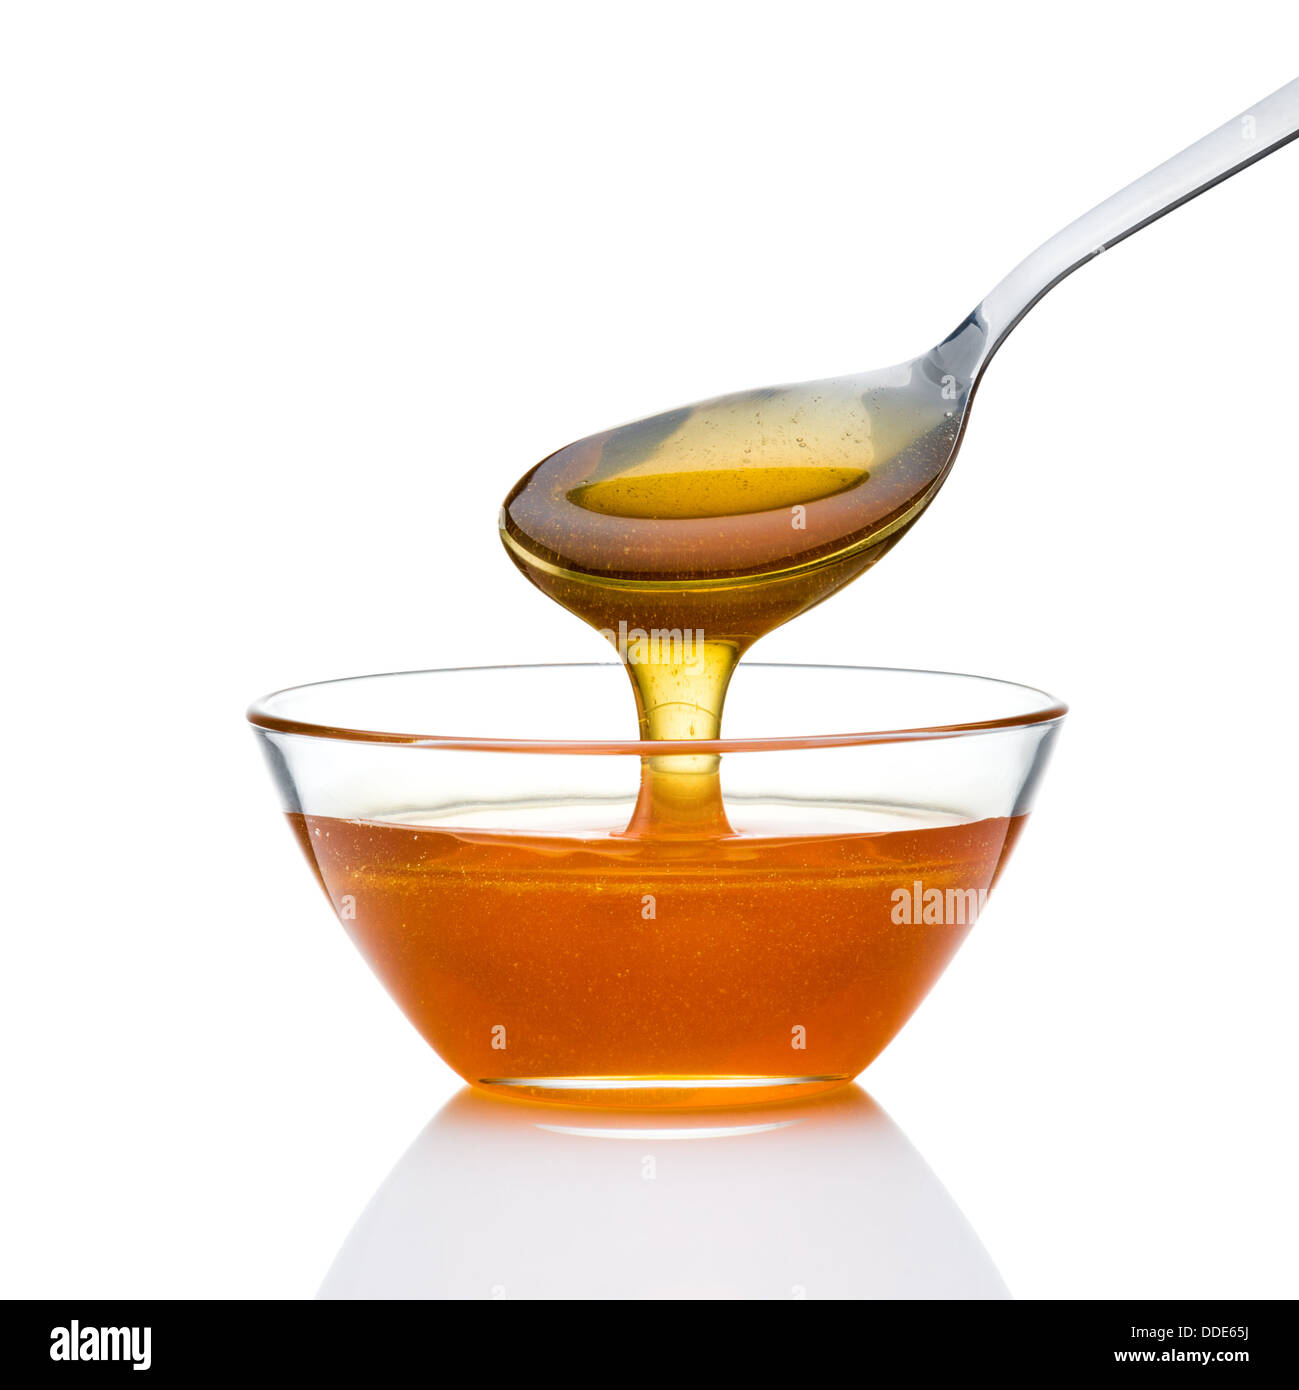 Cucchiaio di miele Foto stock - Alamy